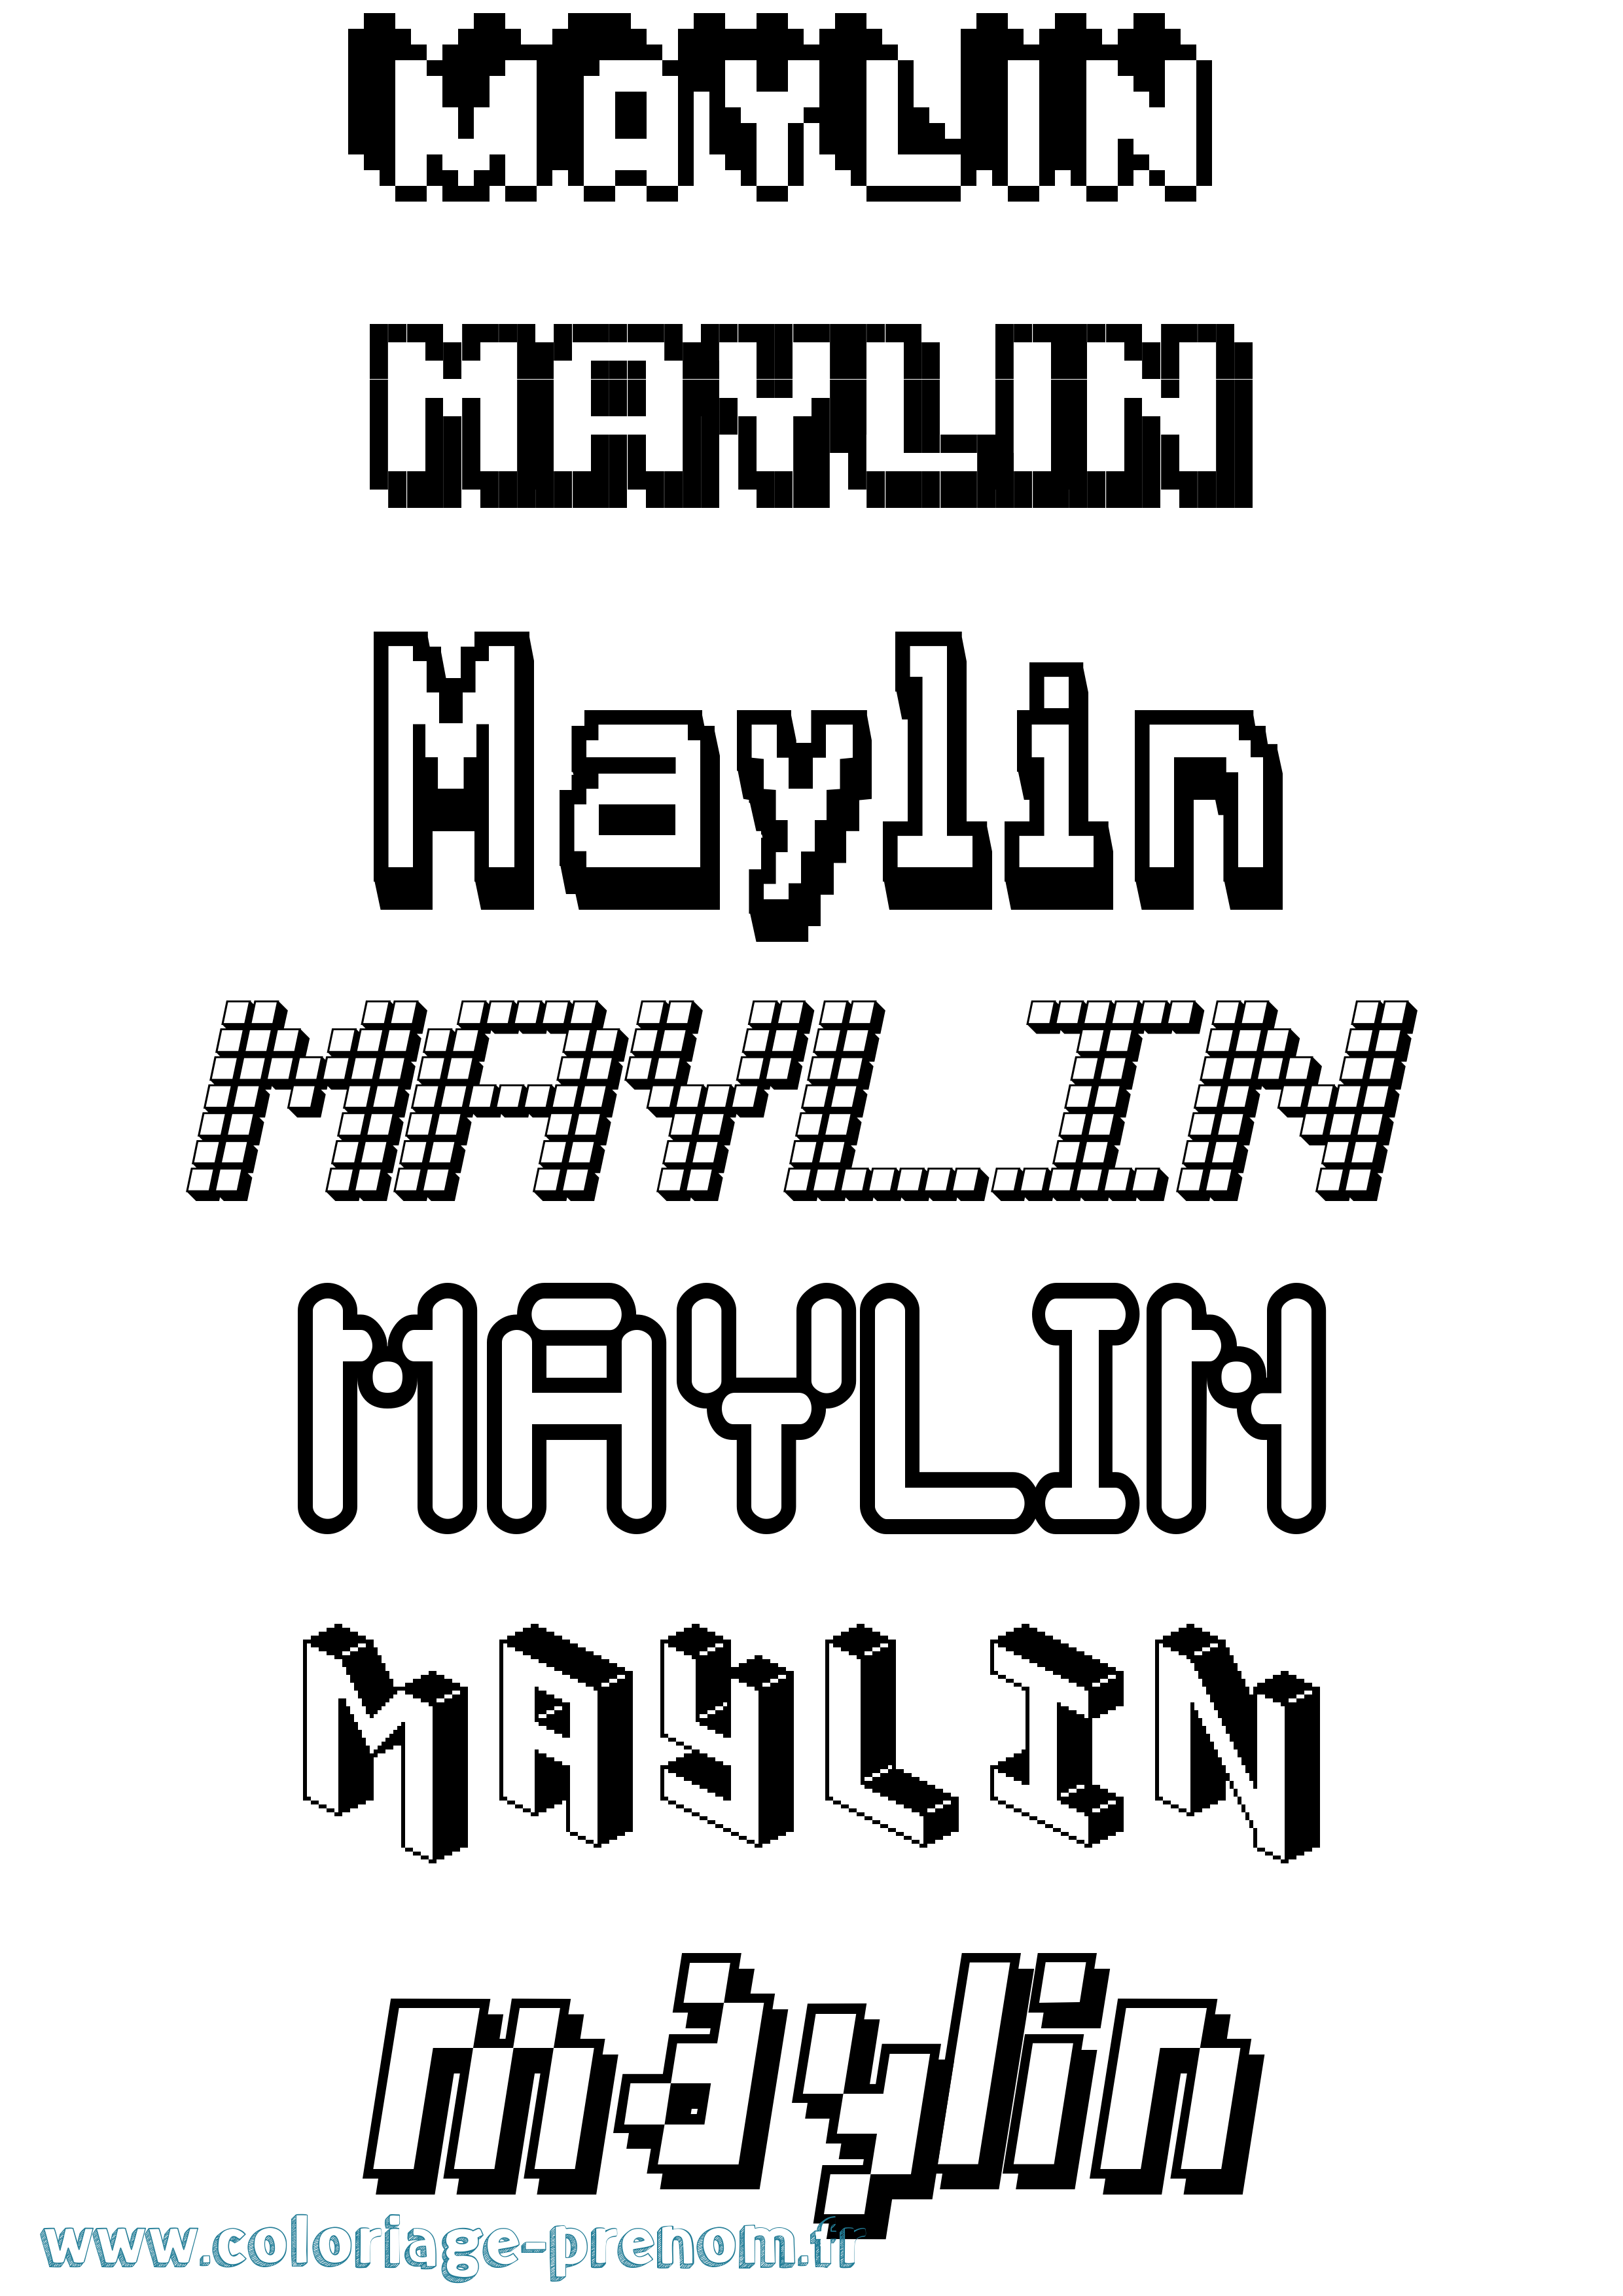 Coloriage prénom Maylin Pixel